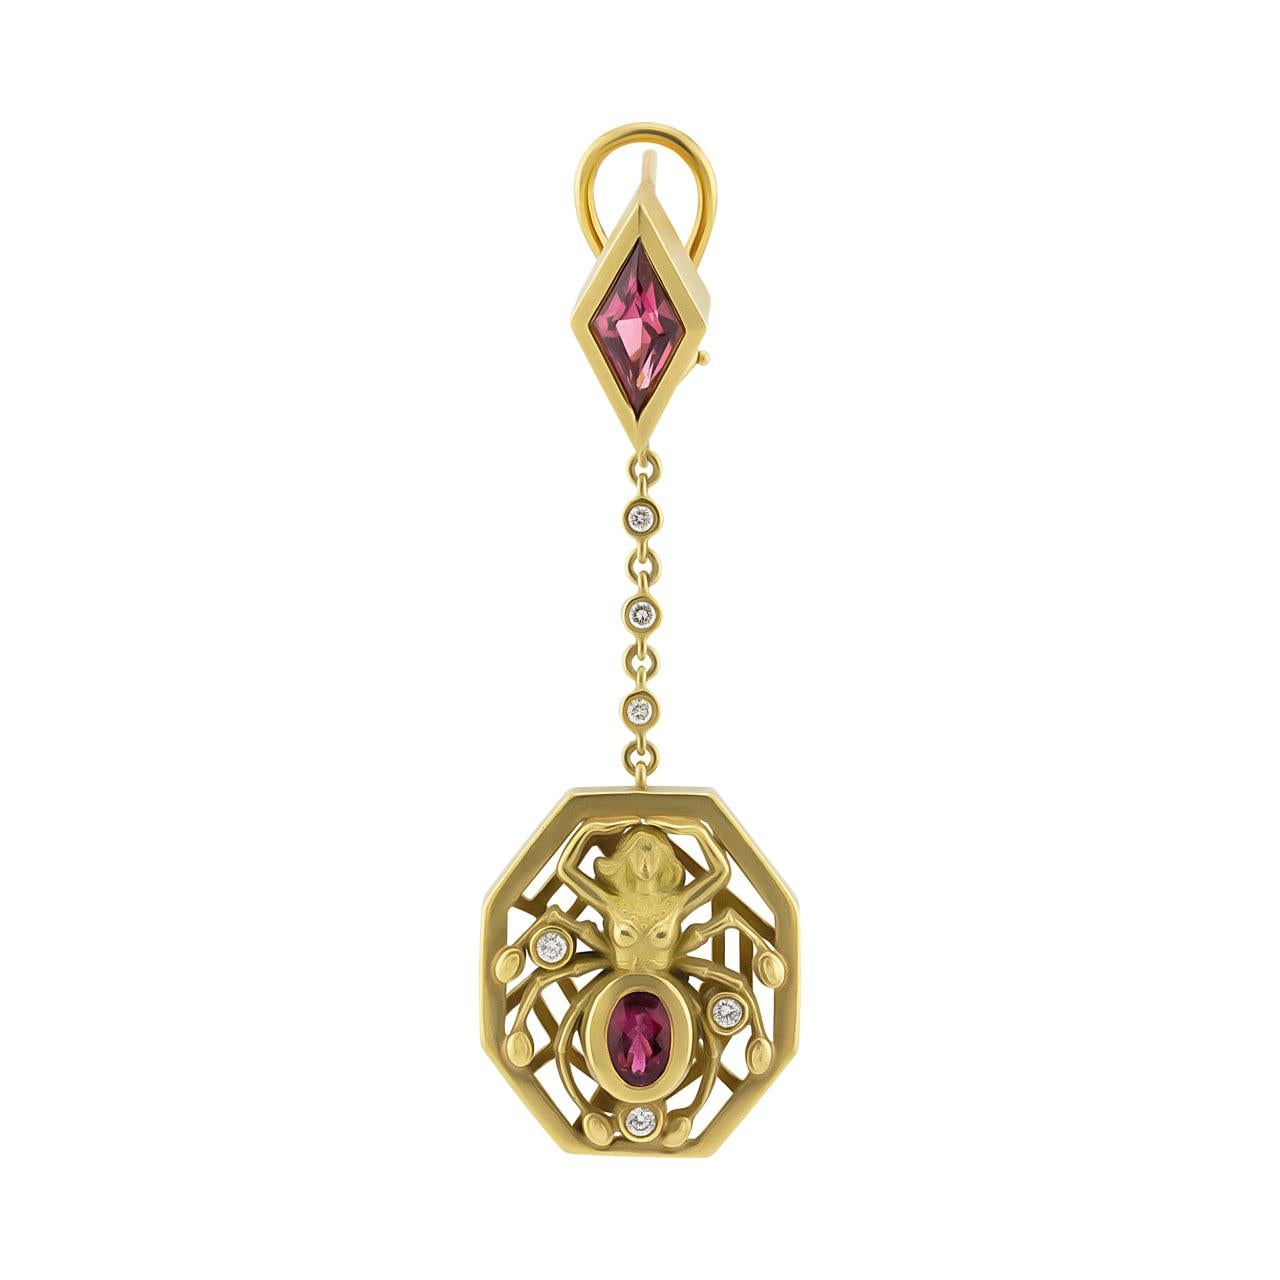 Barry Kieselstein-Cord Goddess Earrings
18K Yellow Gold
Diamond & Pink Sapphires
SKU: BKC01002